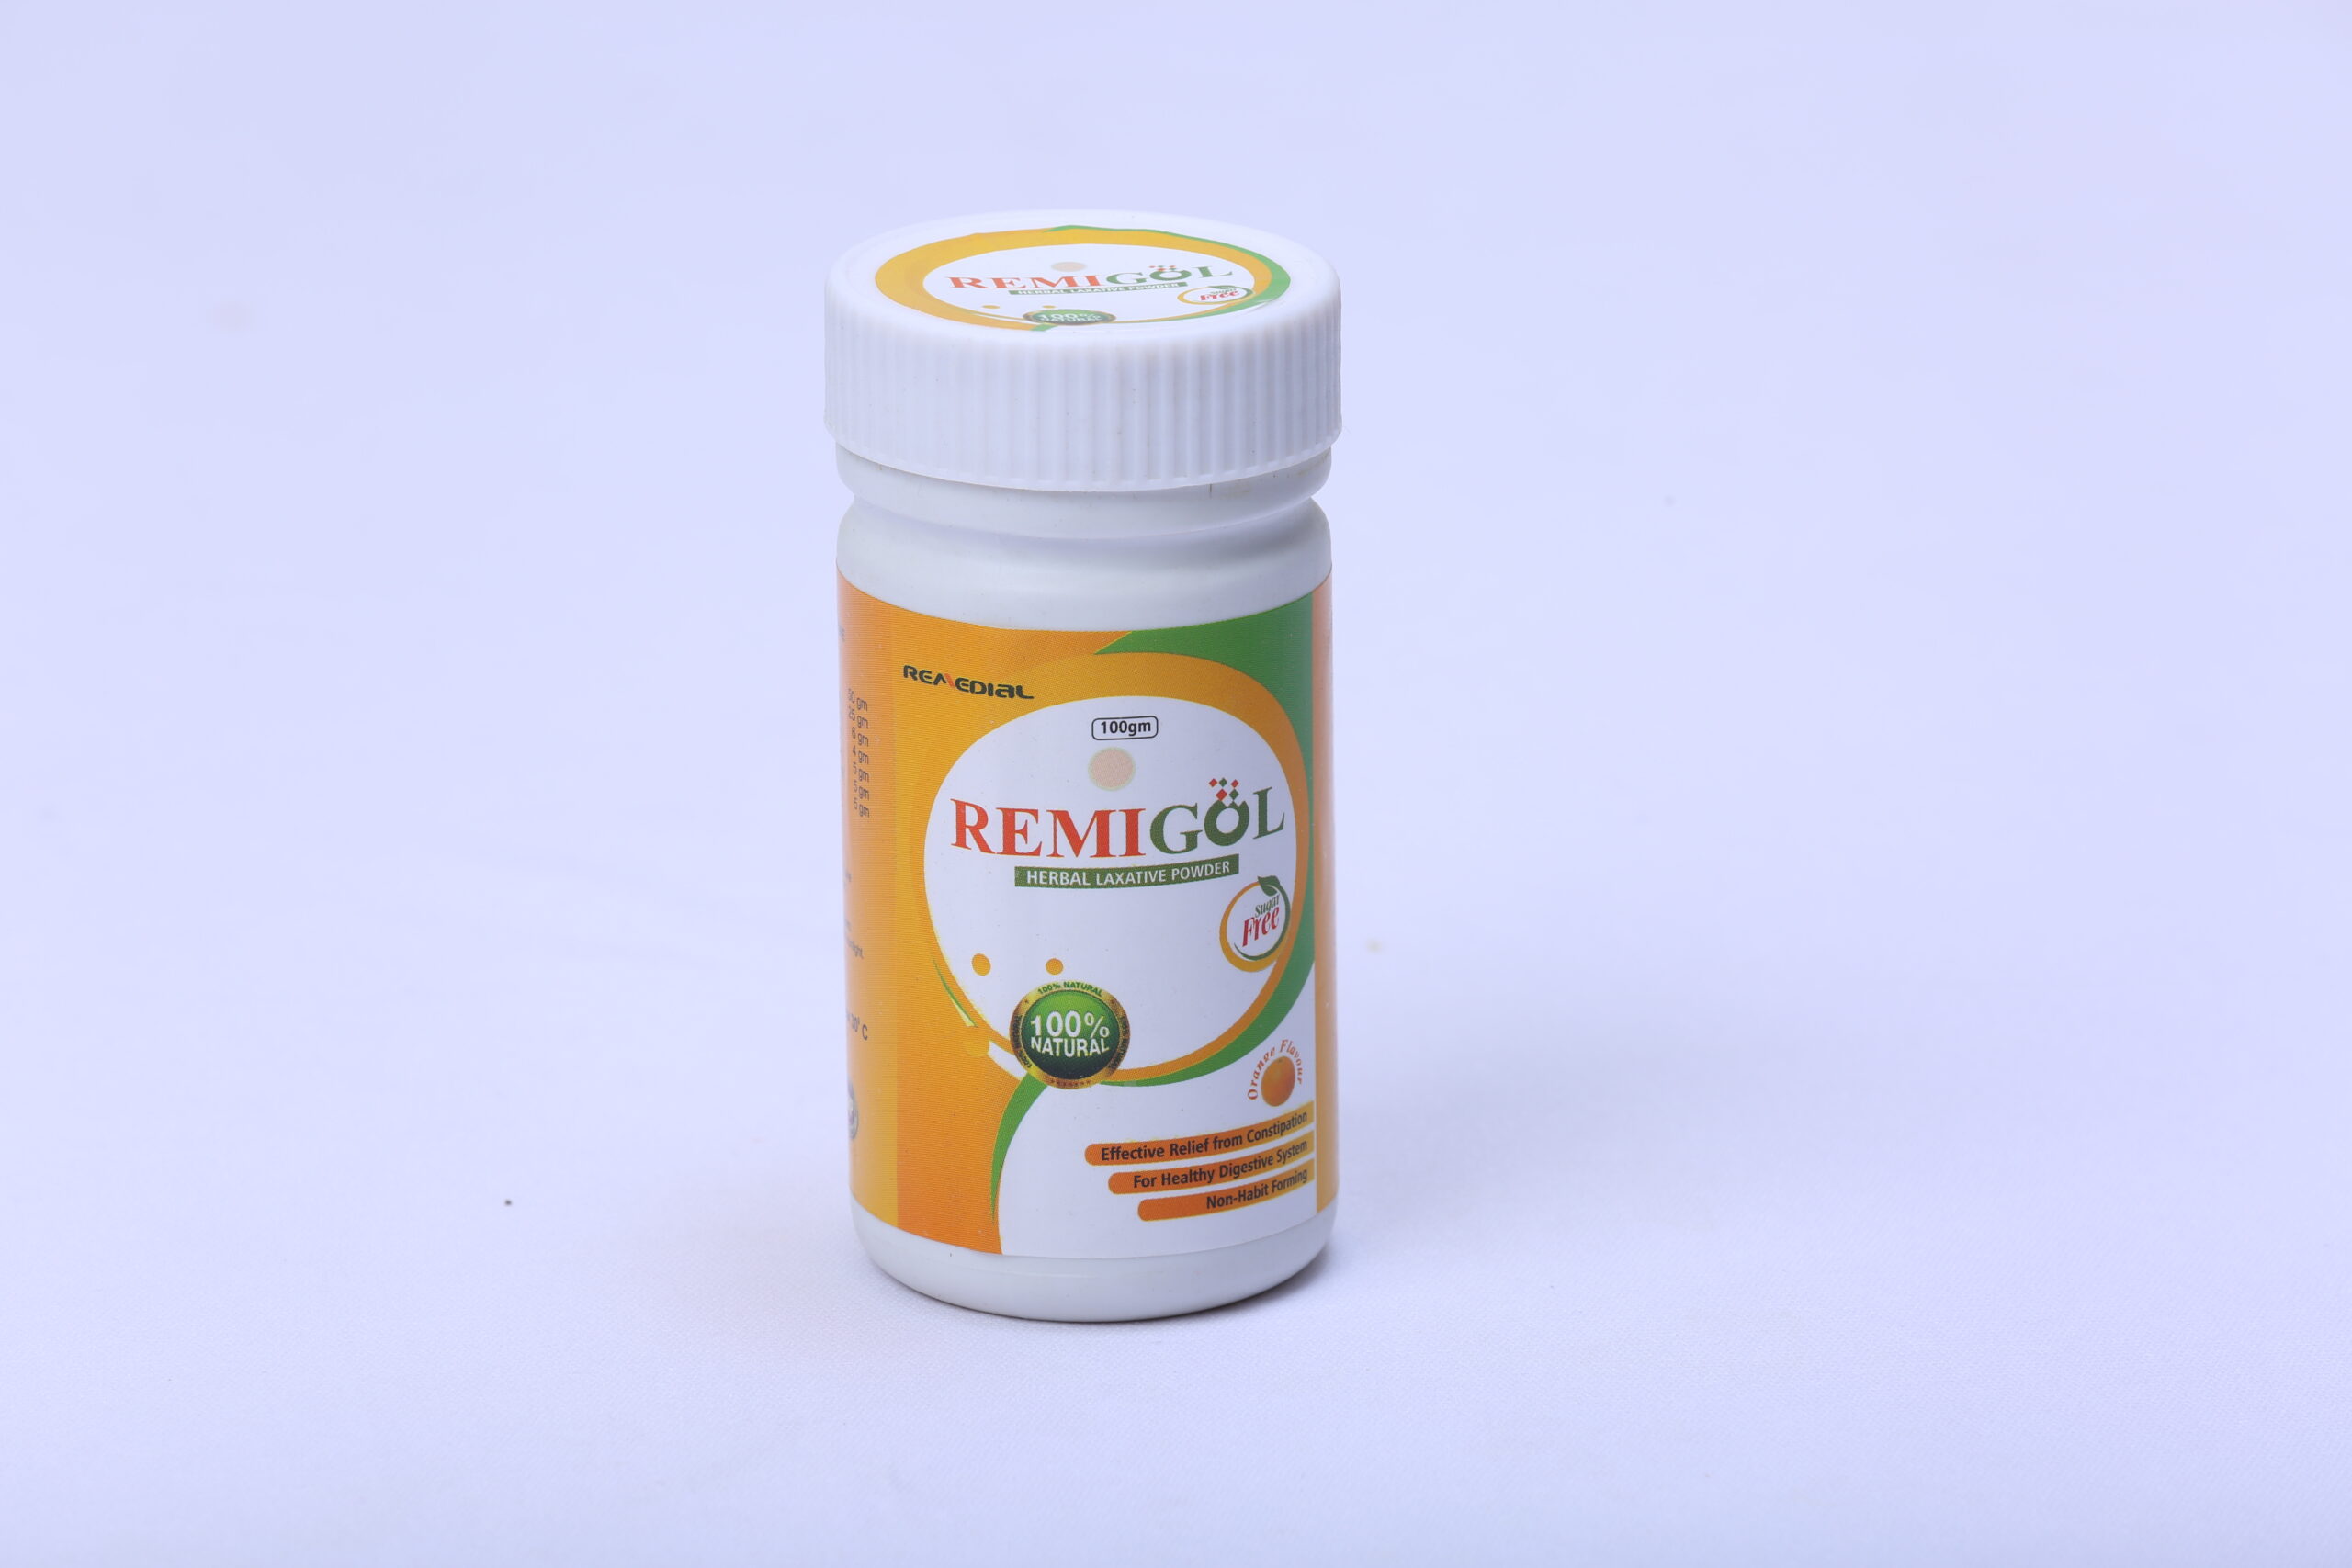 REMIGOL POWDER (Herbal Laxative Powder)